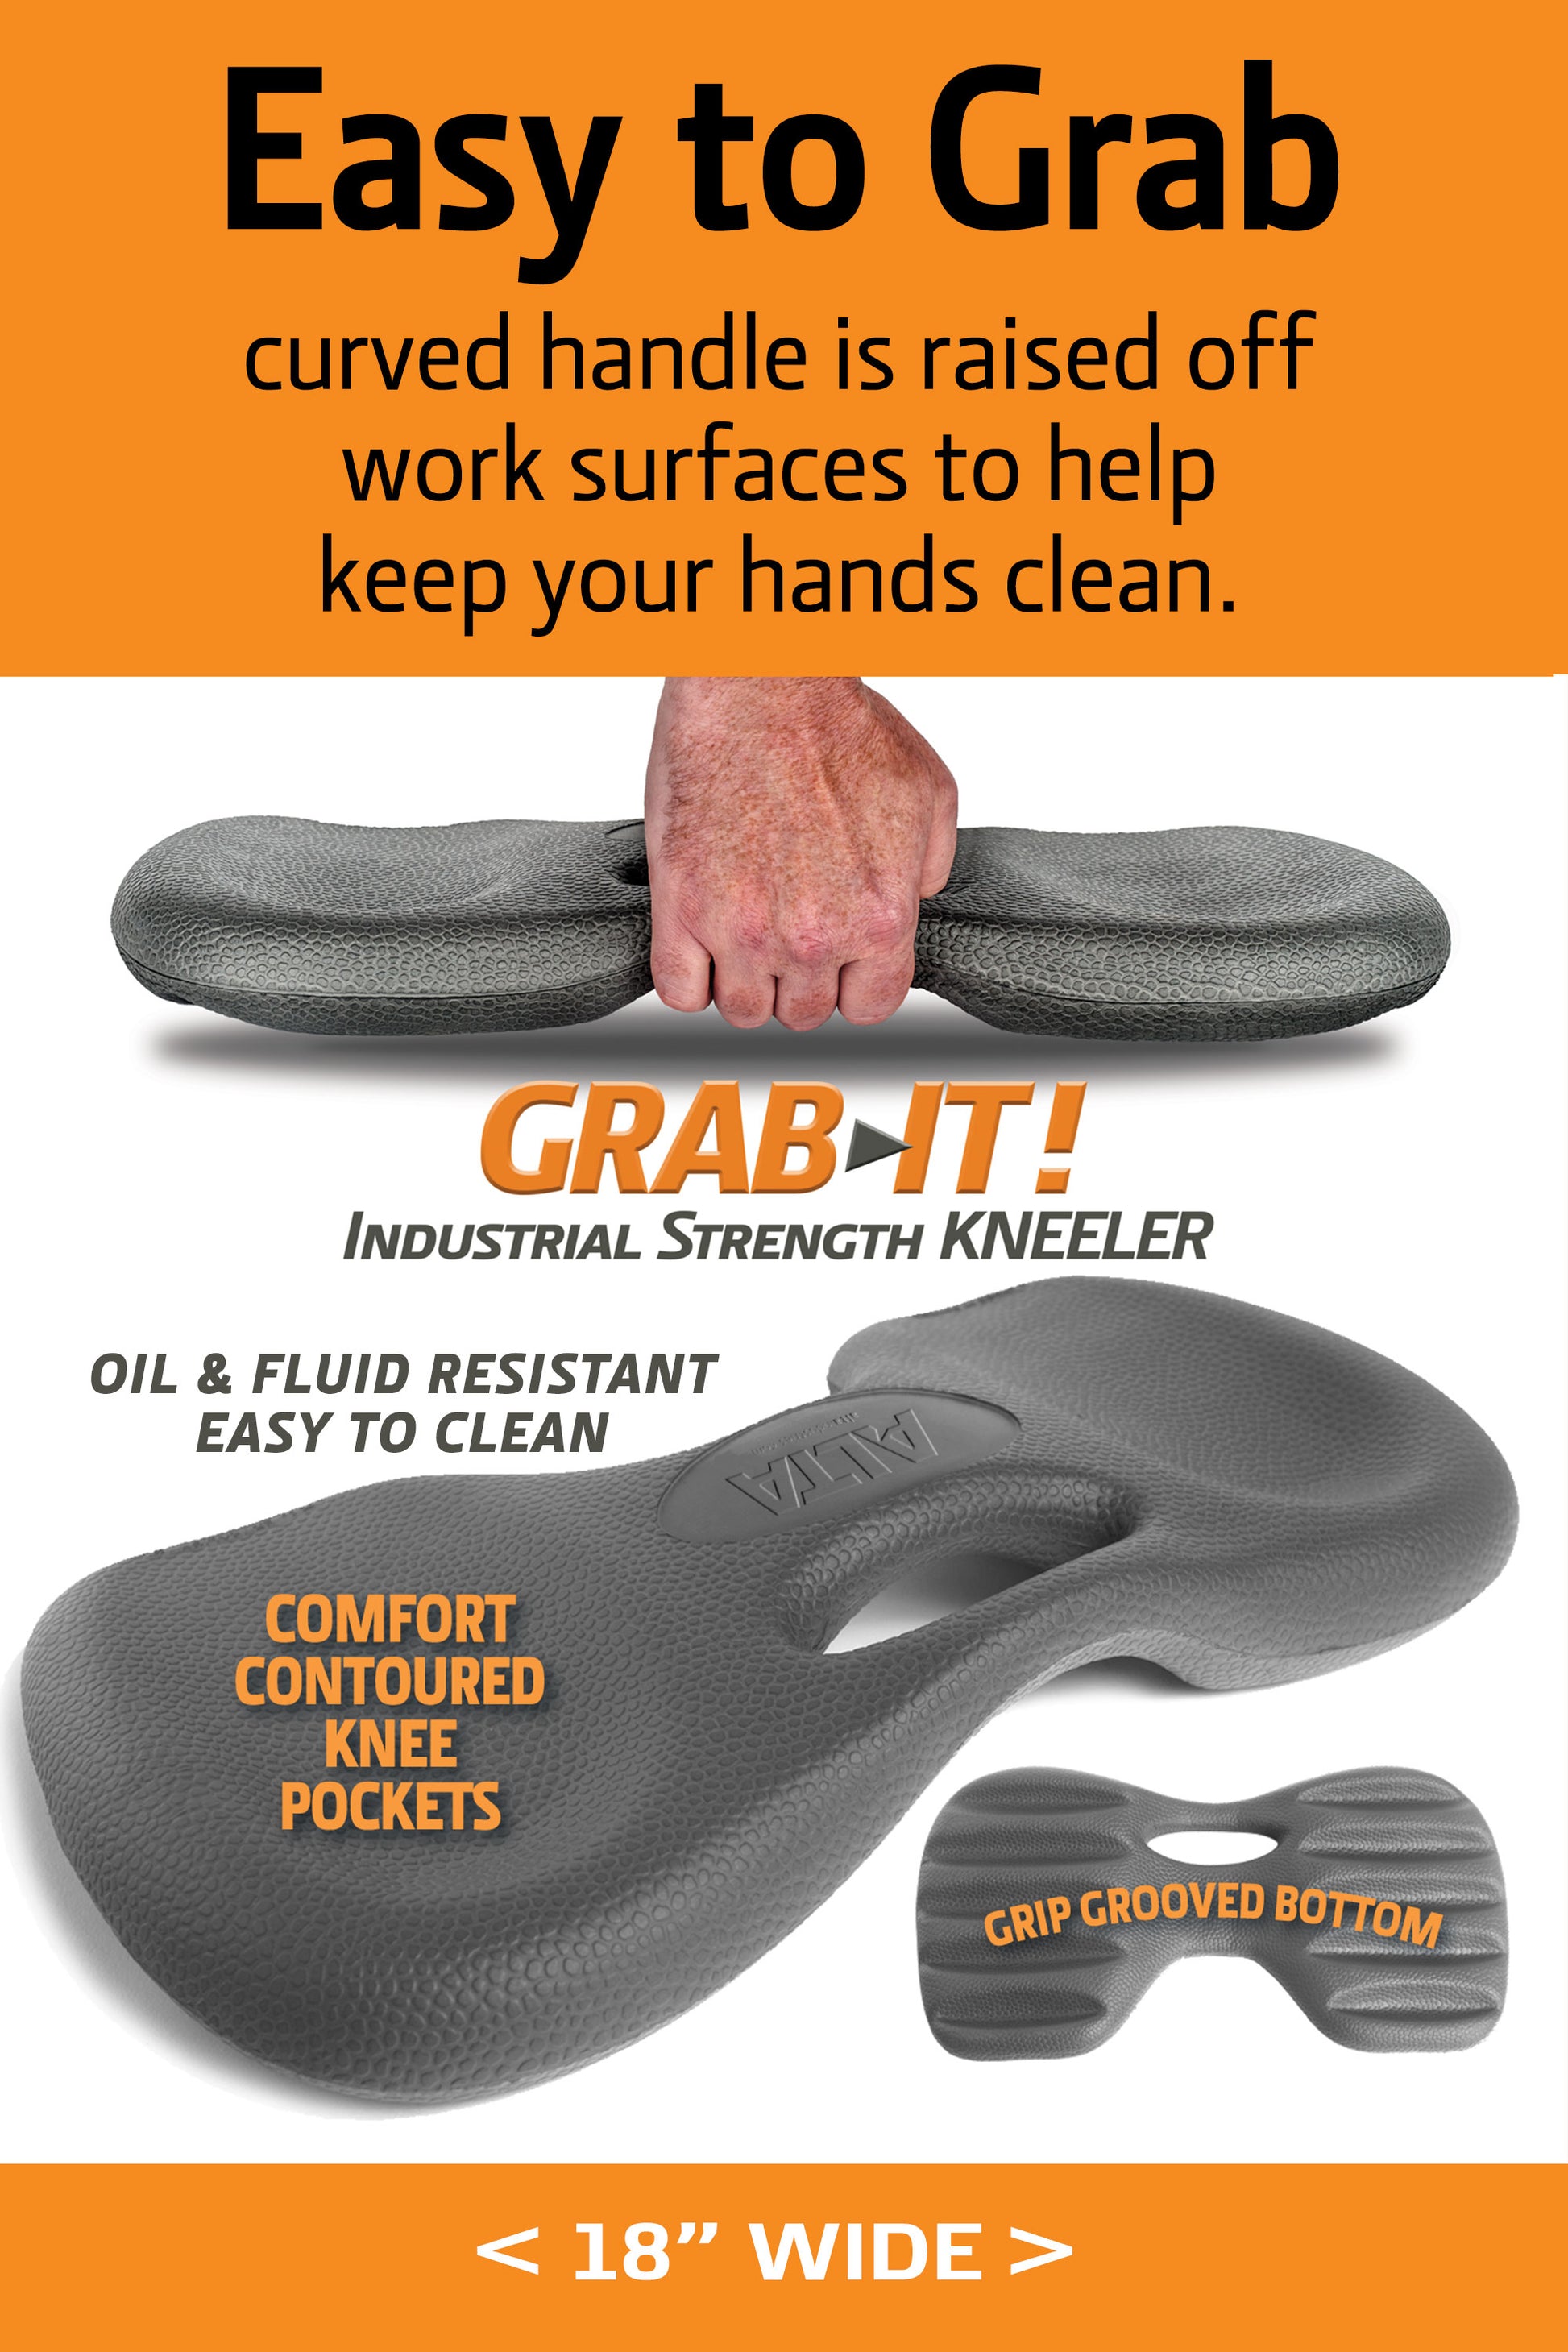 ALTA kneeling pad Flexible rubber kneeling pad resists fluids and chemicals and is waterproof 